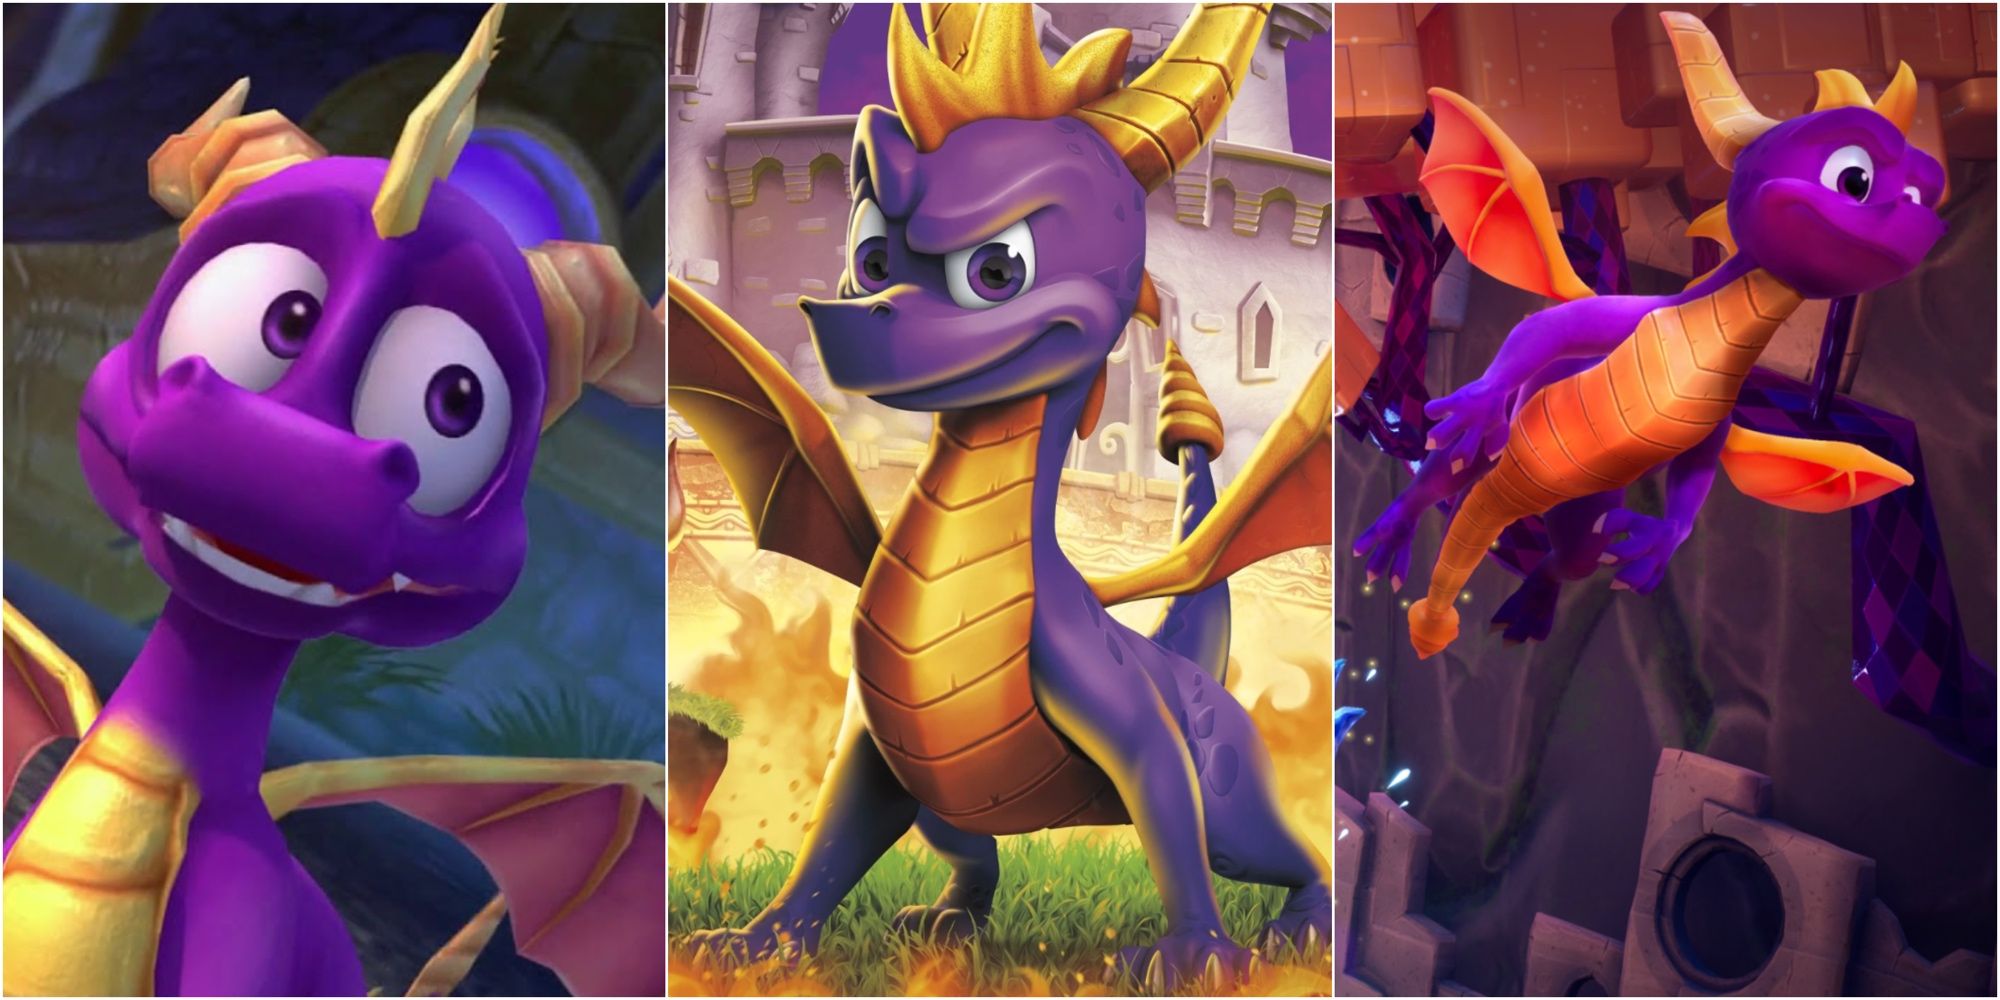 Spyro the Dragon 